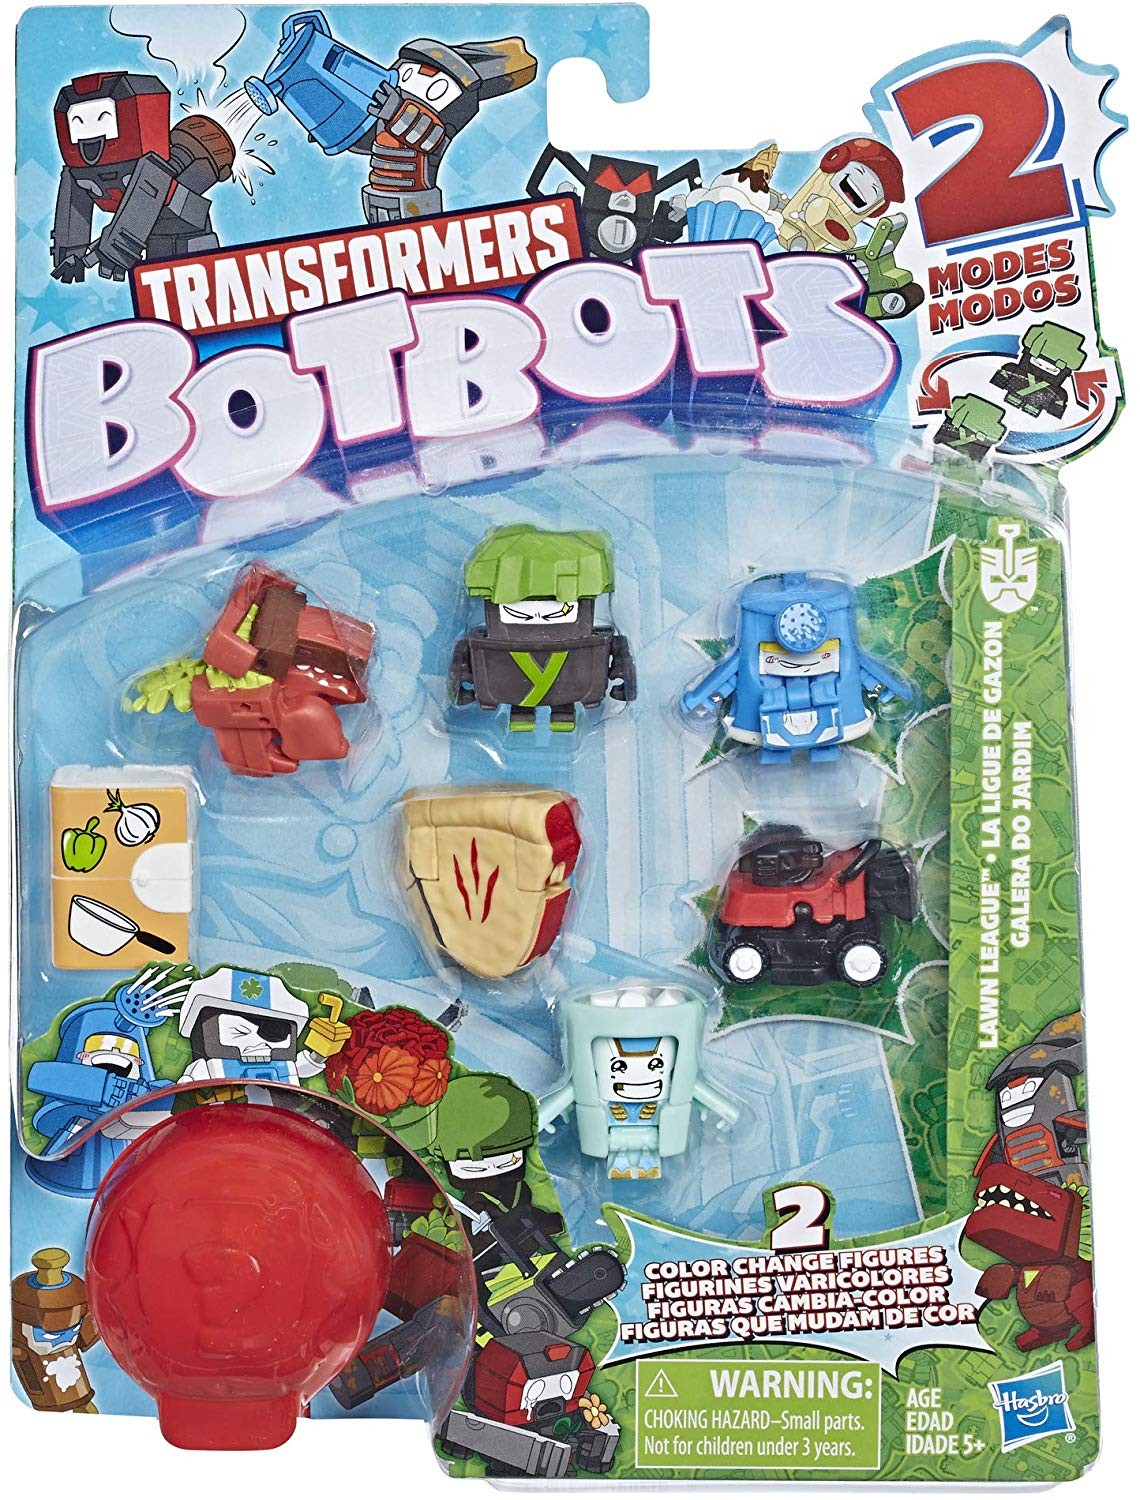 Transformers Botbots Hibotchi Heats Series 5 MOC 2020 Hasbro for sale online